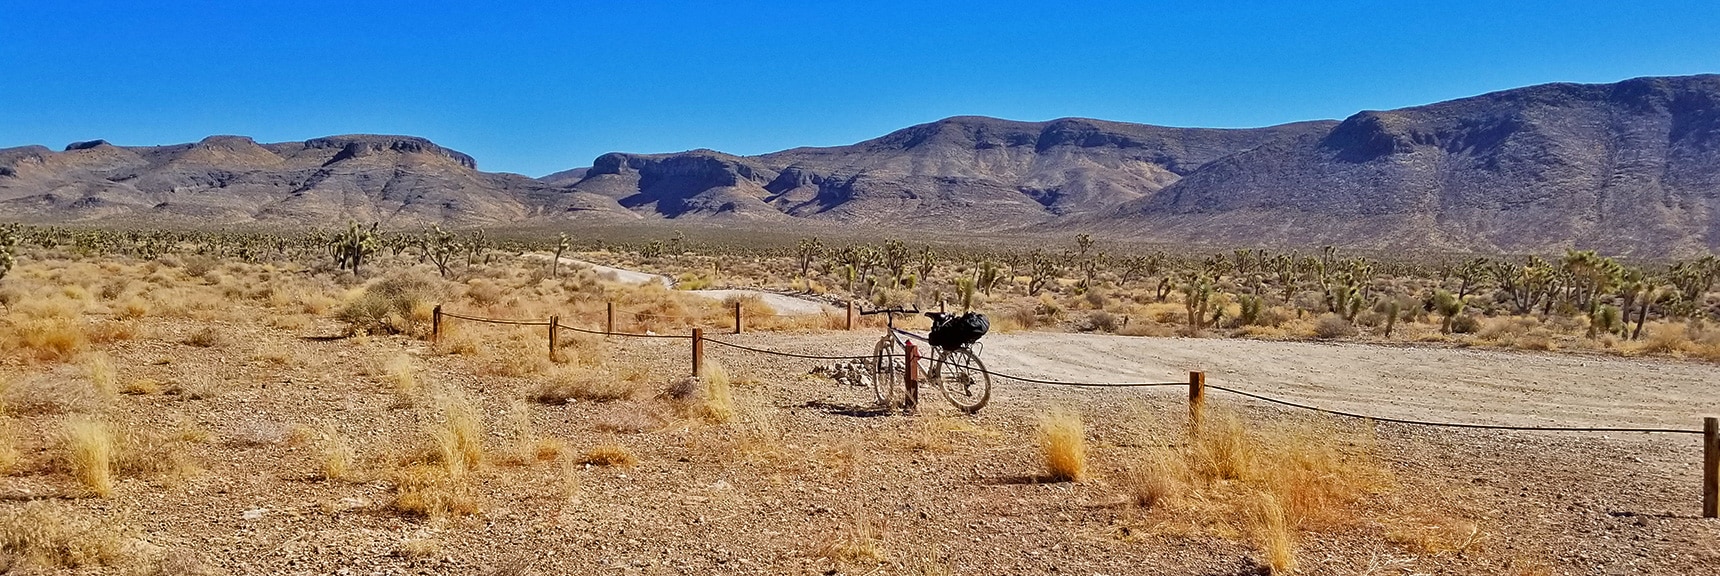 View Up Mormon Well Road Beyond Pine Nut Road Toward Sheep Range | Lower Mormon Well Road | Sheep Range, Desert National Wildlife Refuge, Nevada